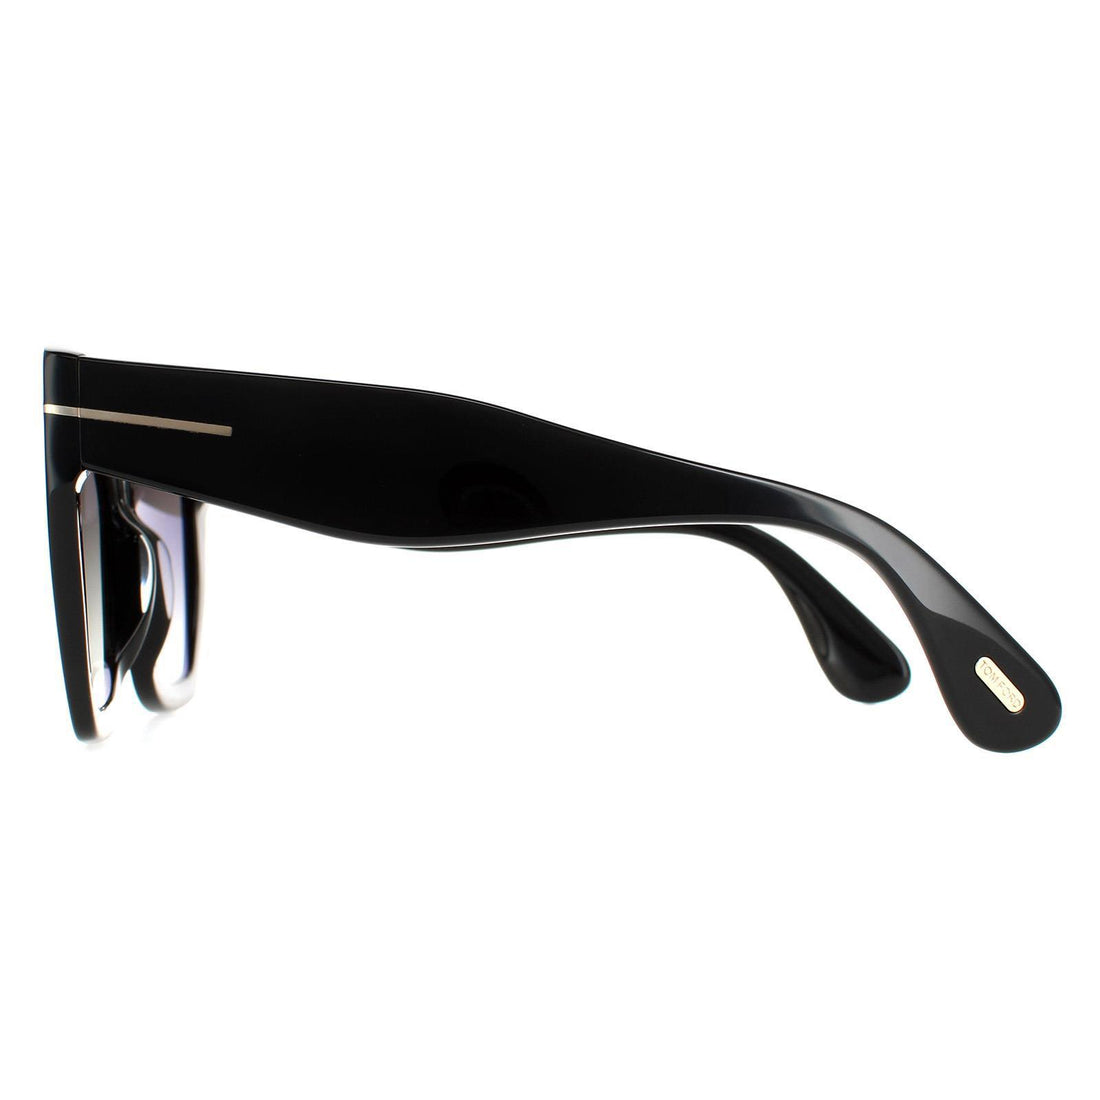 Tom Ford Sunglasses FT0939 Phoebe 01B Shiny Black Smoke Gradient